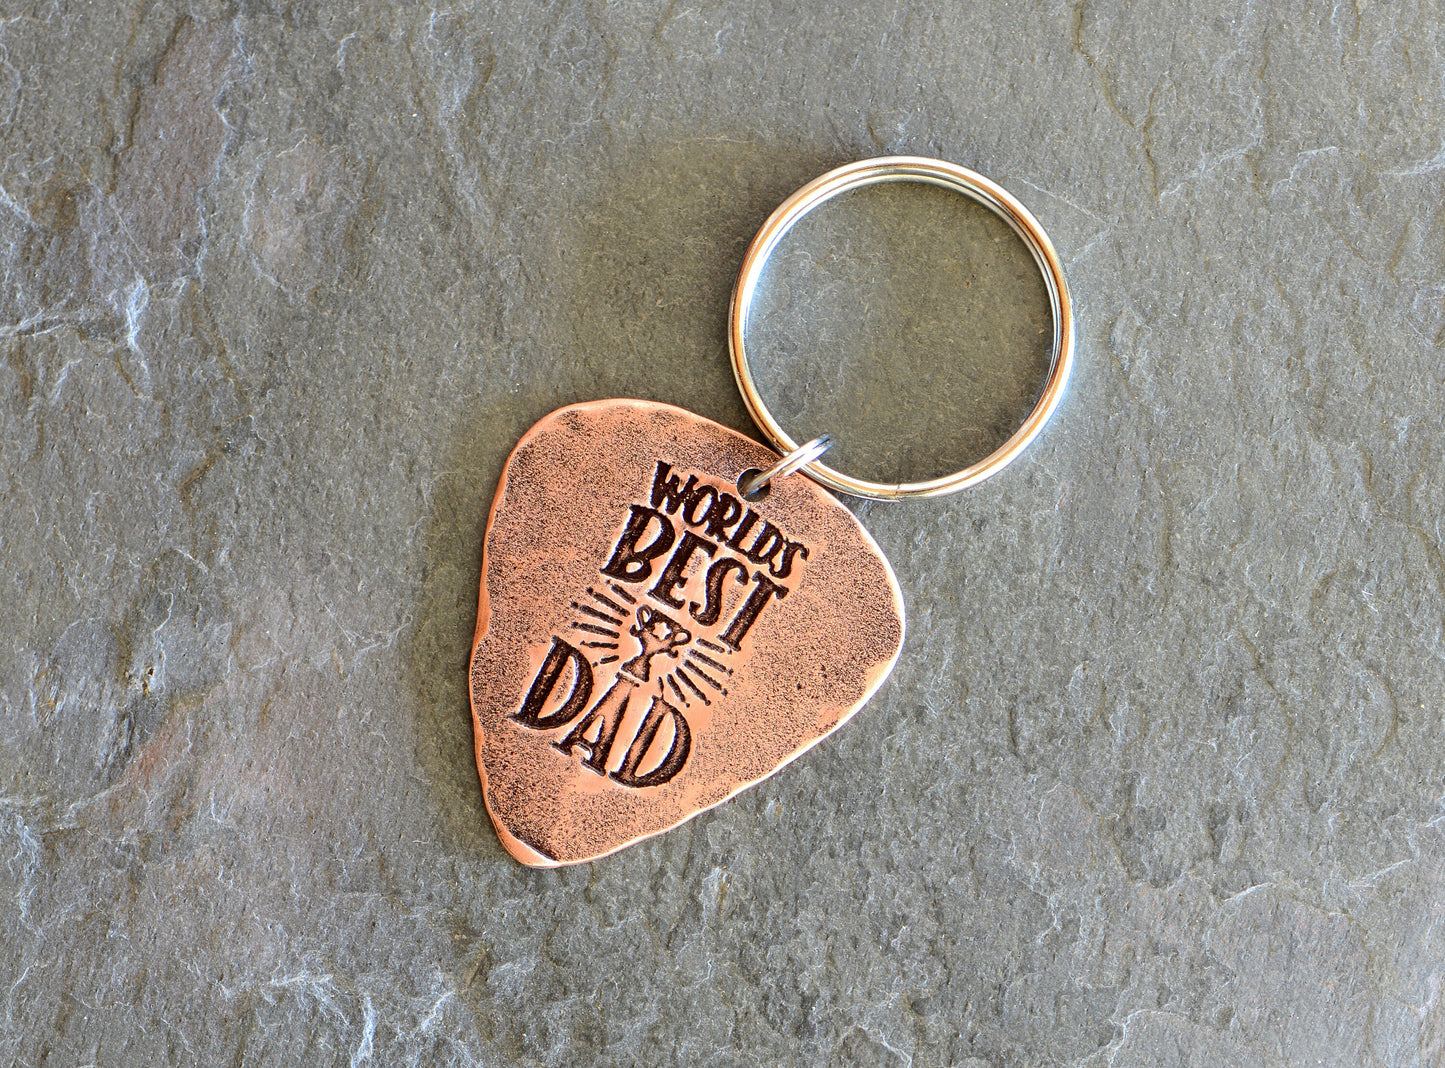 Worlds best dad stamped on a copper guitar pick keychain